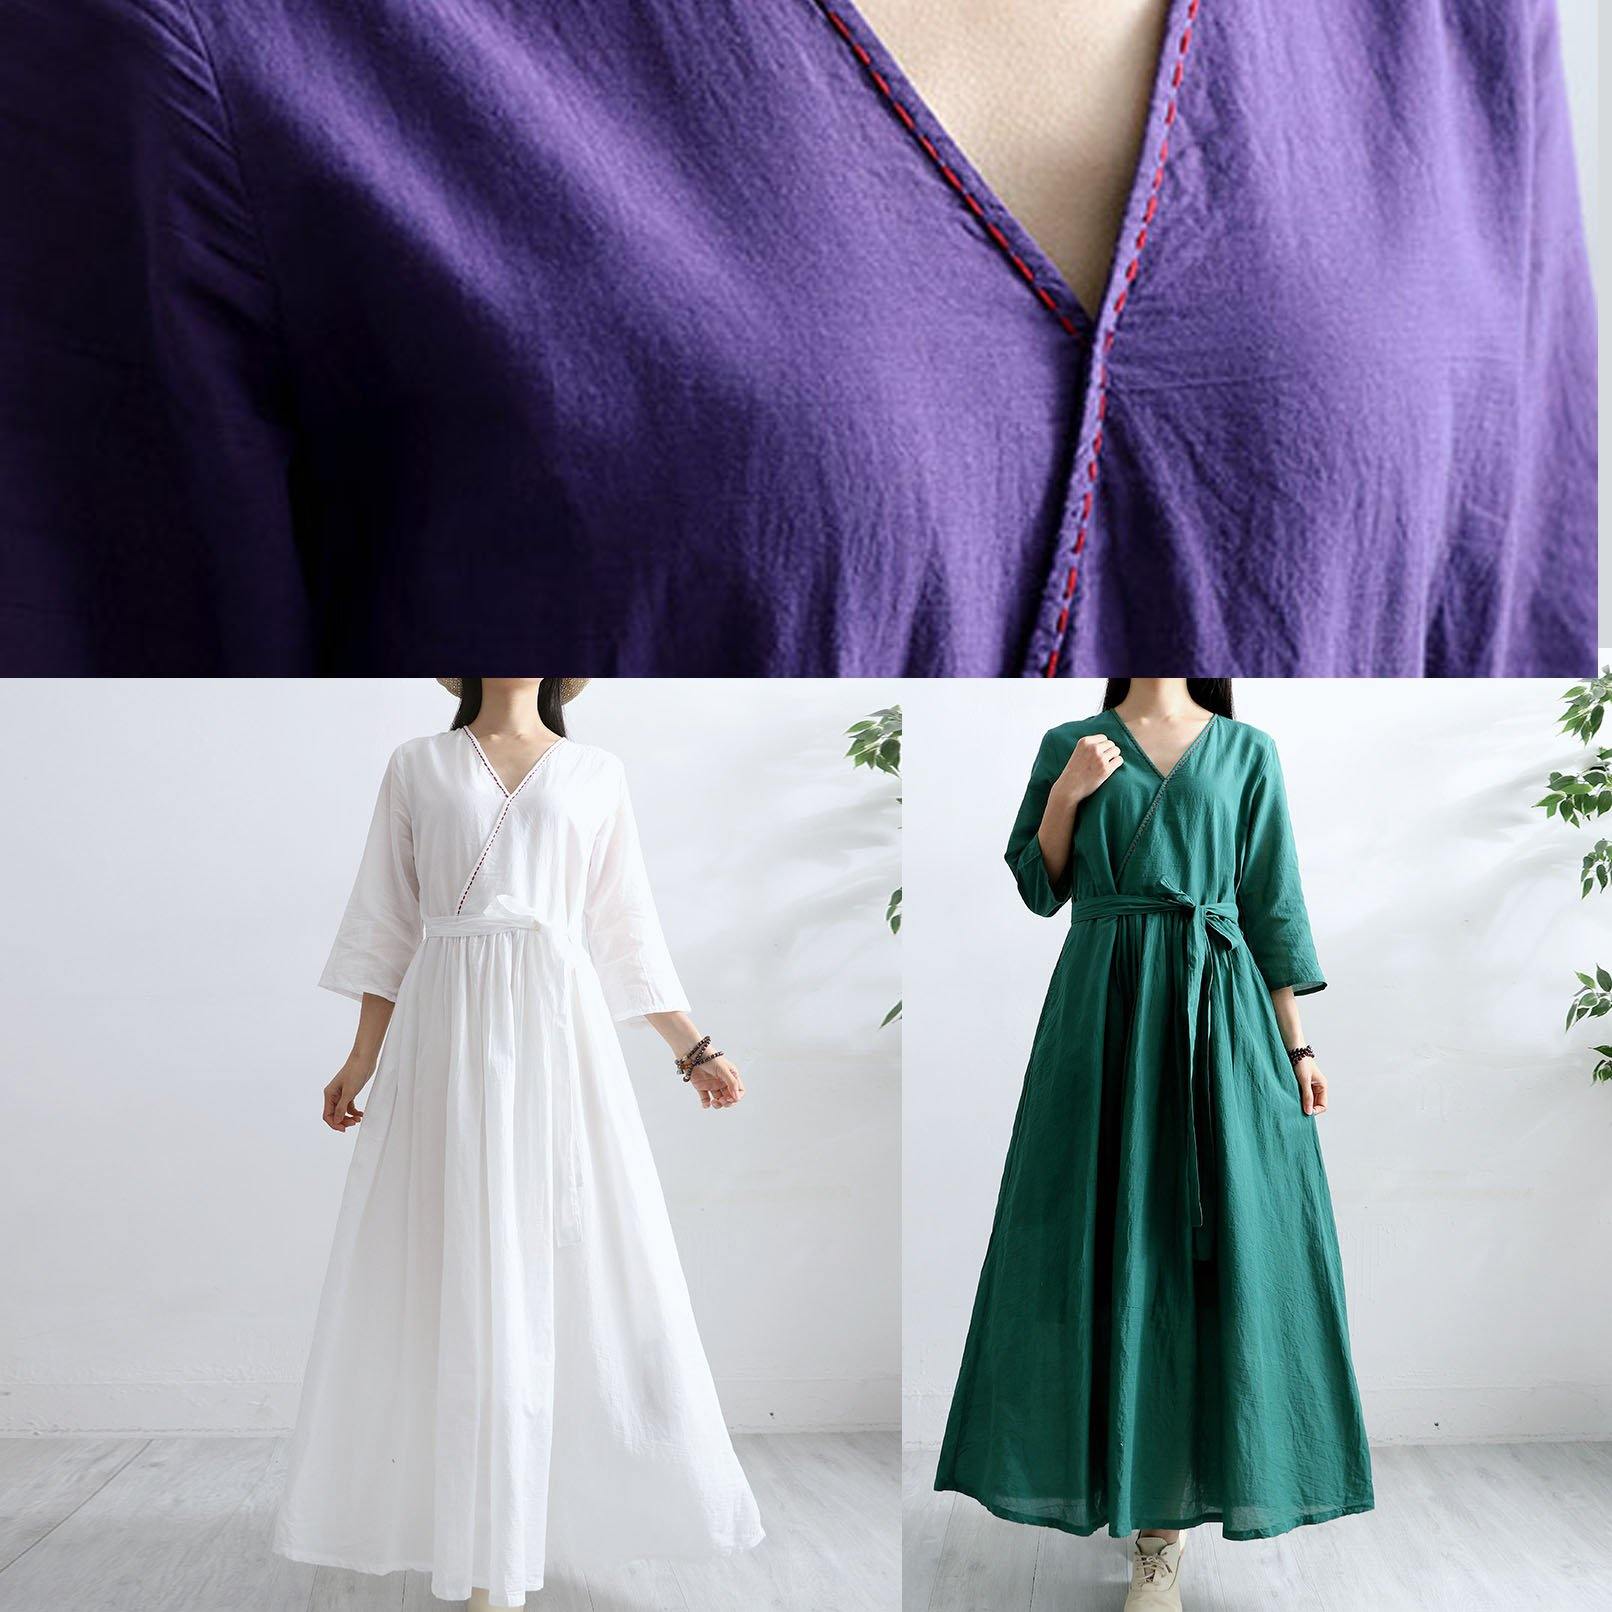 Simple v neck cotton tunic dress Sewing purple long Dresses half sleeve - Omychic